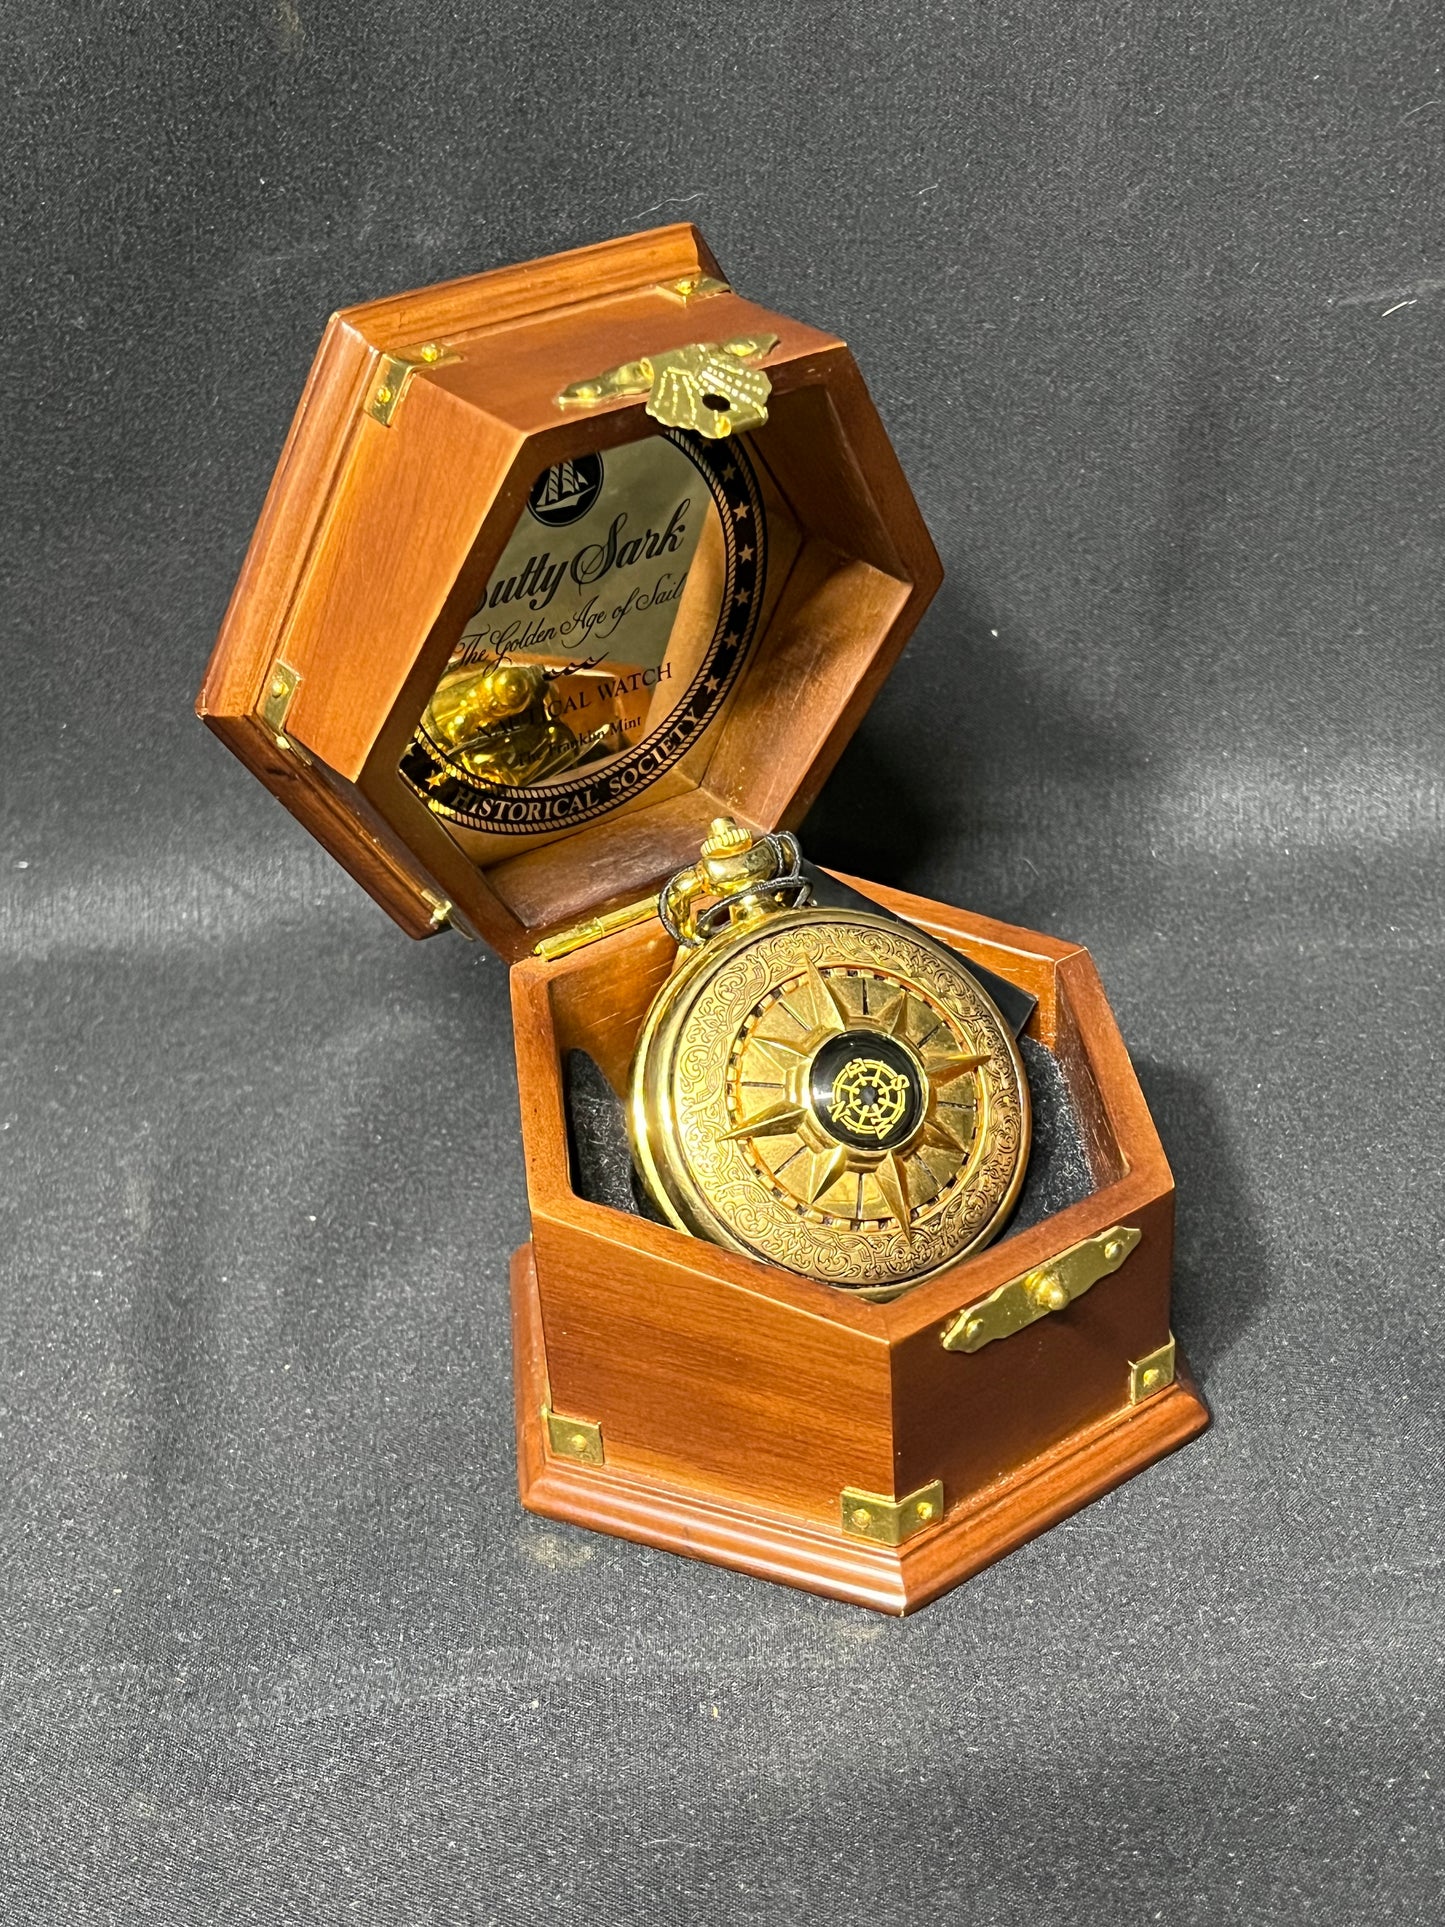 Franklin Mint National Maritime Historical Society Pocket Watch - Cutty Sark